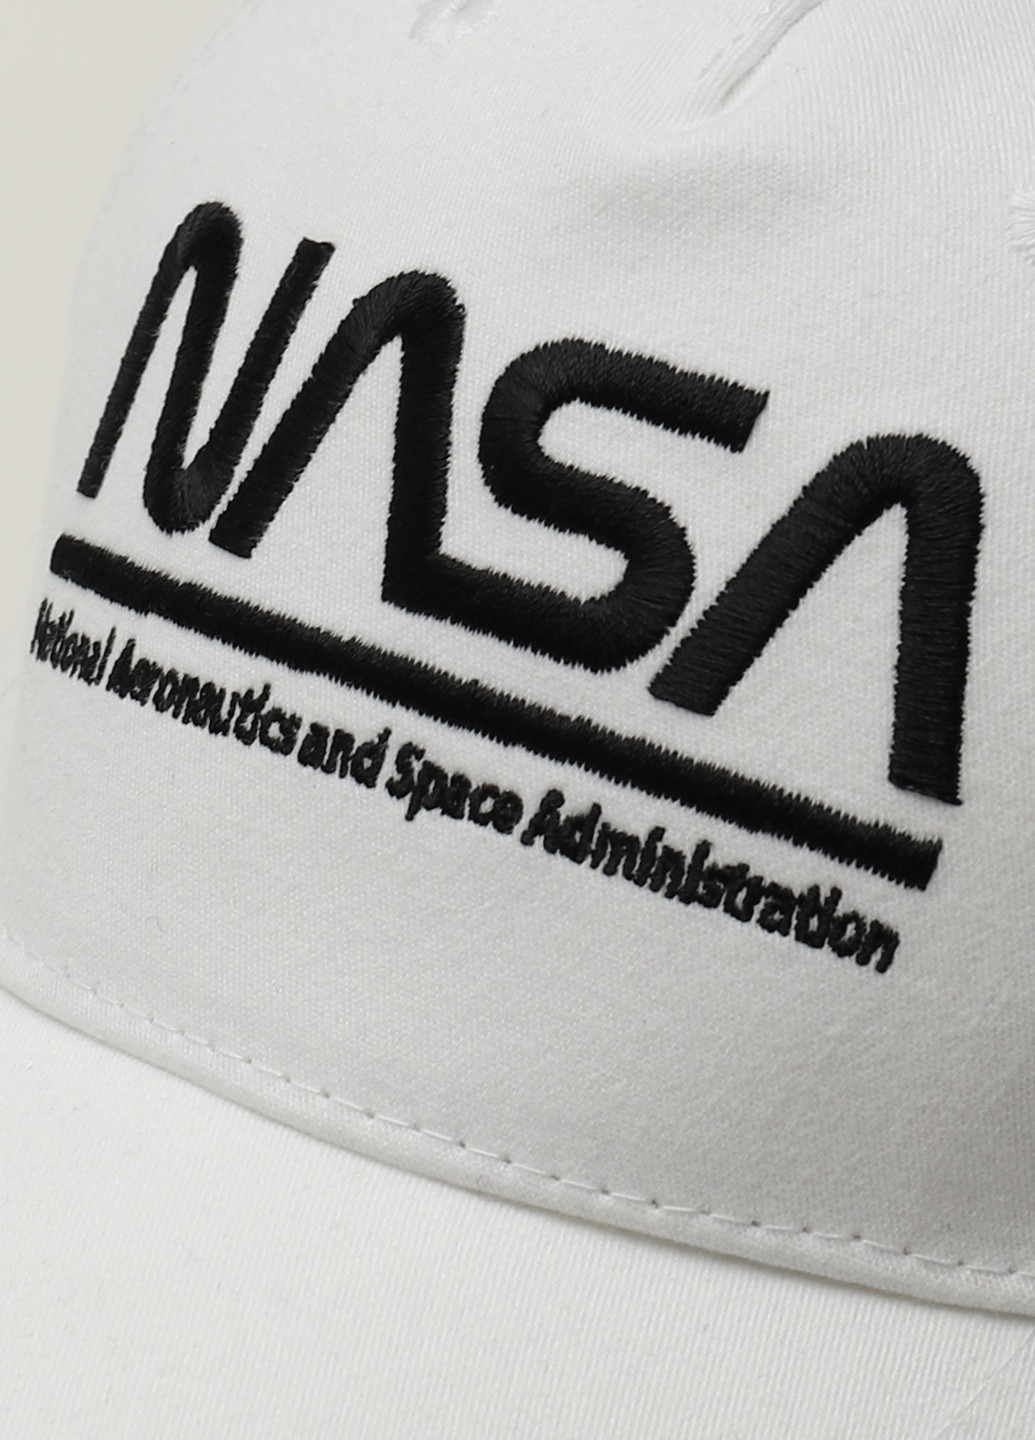 Чорна кепка з логотипом Nasa (251240660)